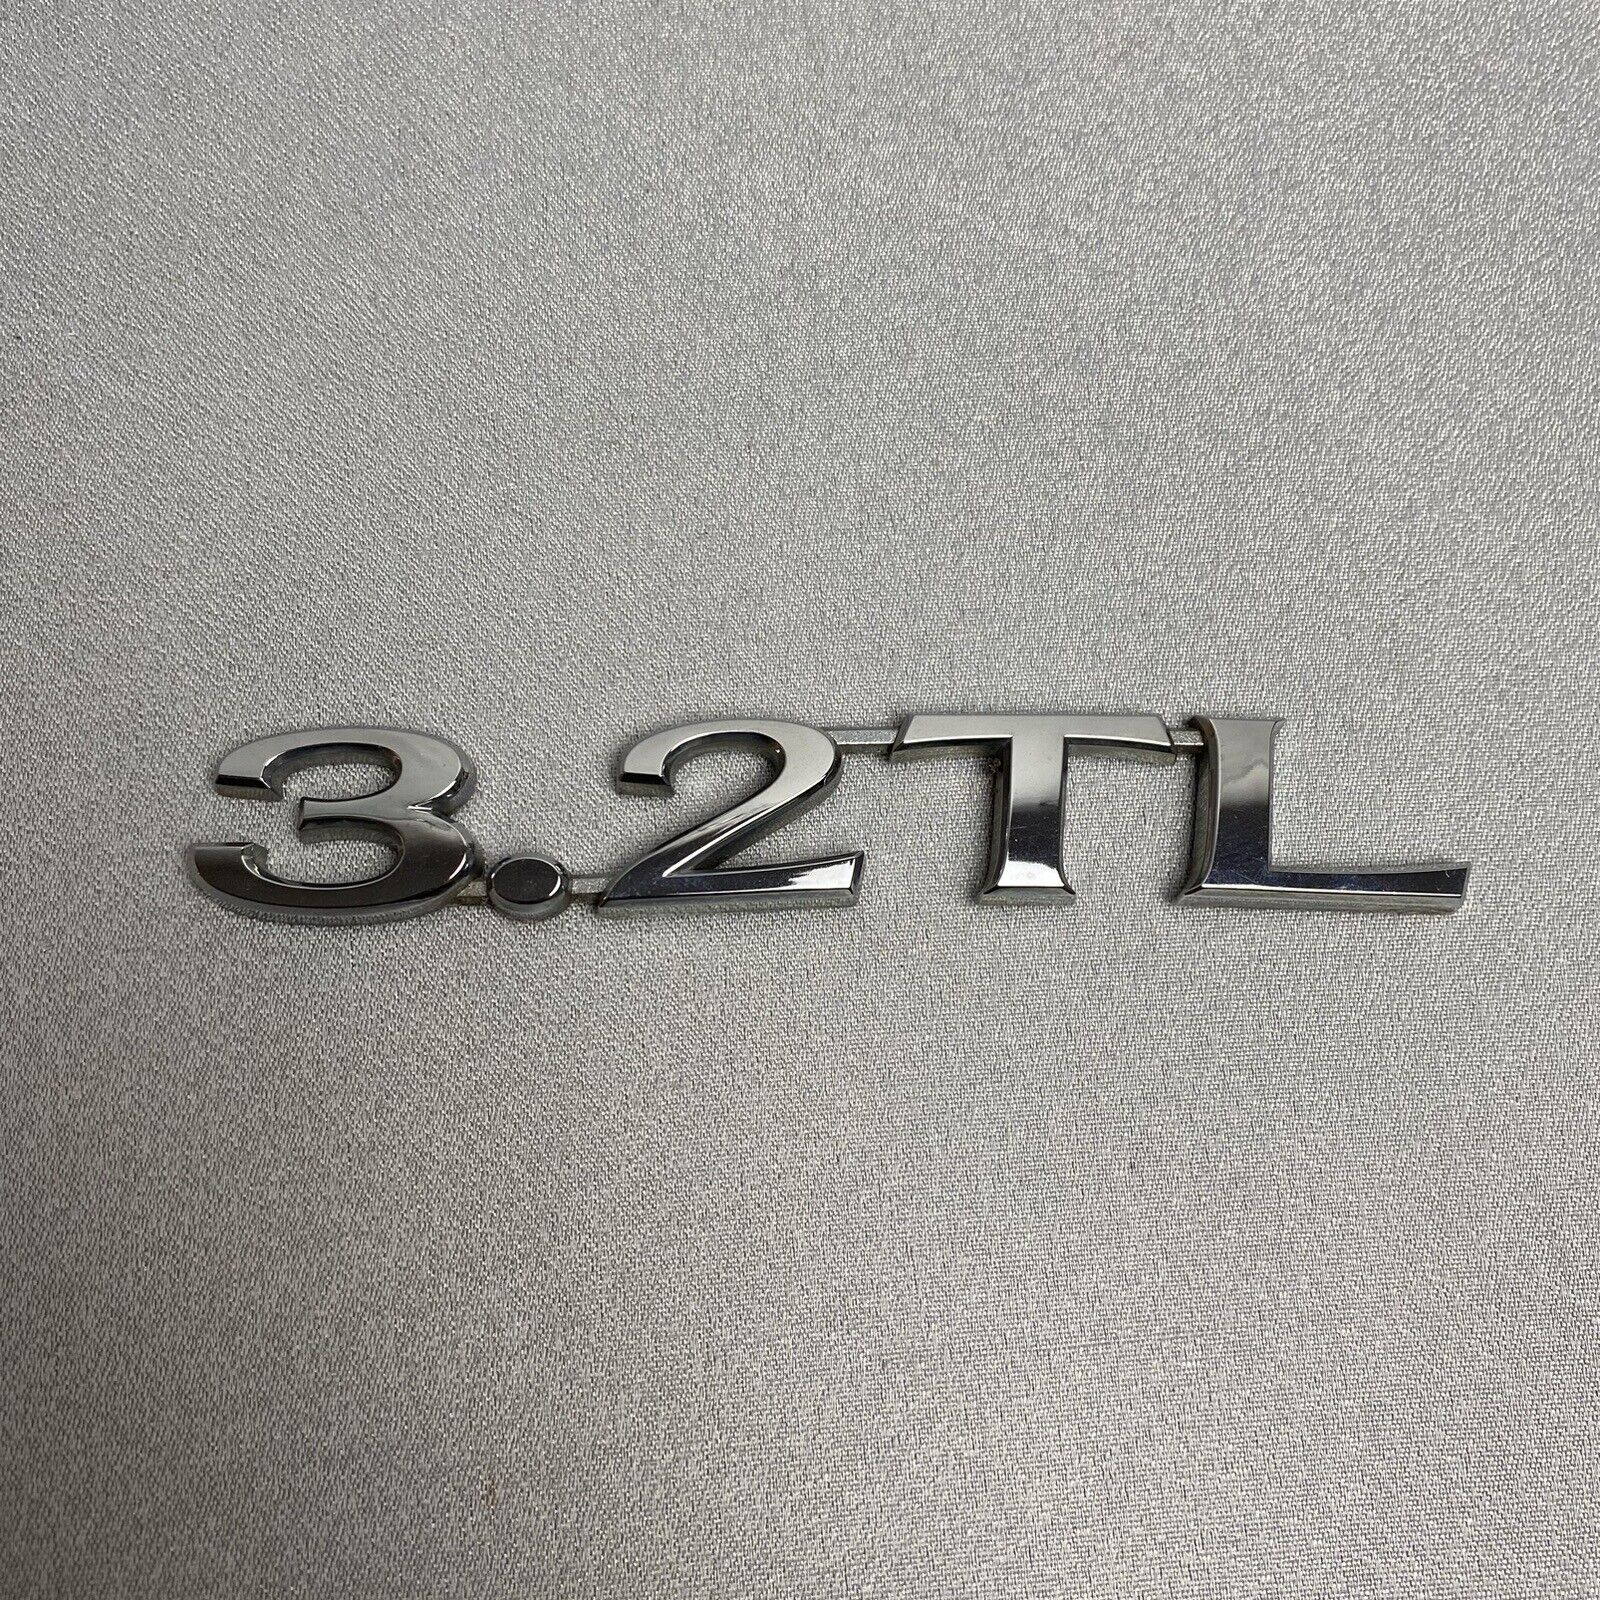 1999 - 2003 Acura TL Rear Trunk 3.2TL Emblem Logo Badge Chrome OEM